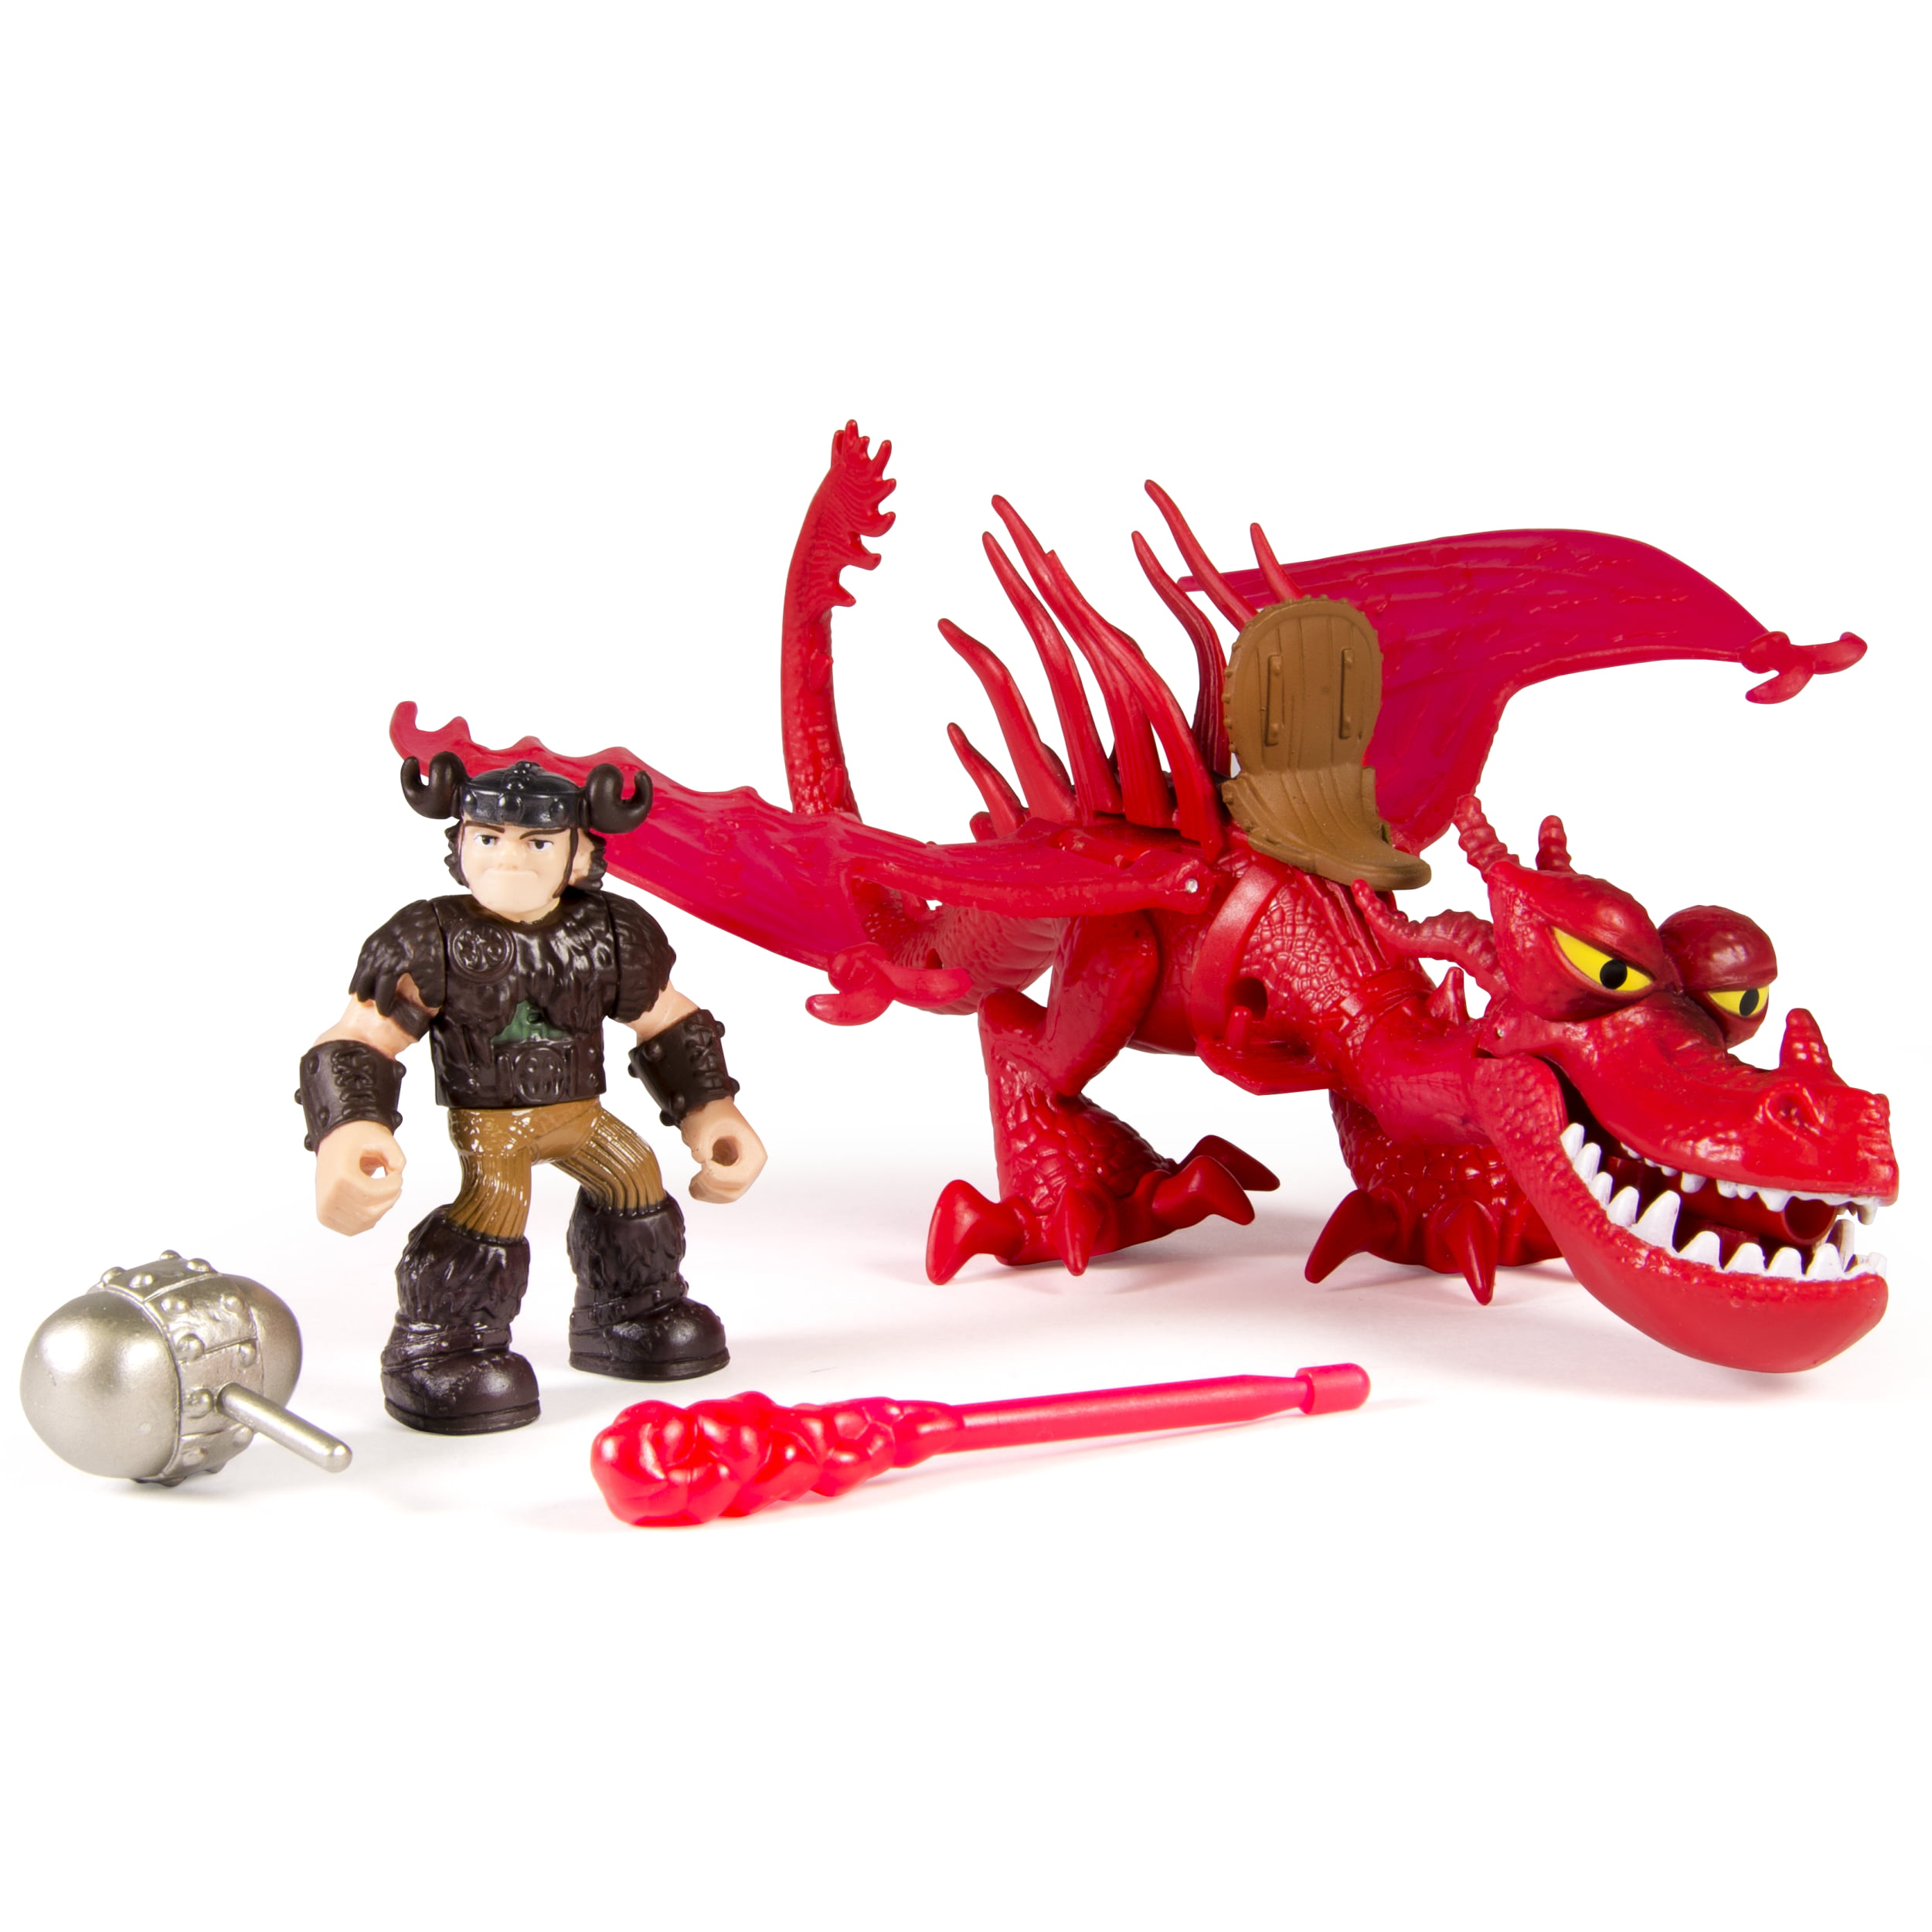 Dreamworks Dragons Dragon Riders Snotlout Hookfang Figures Brickseek - dragon riders roblox codes